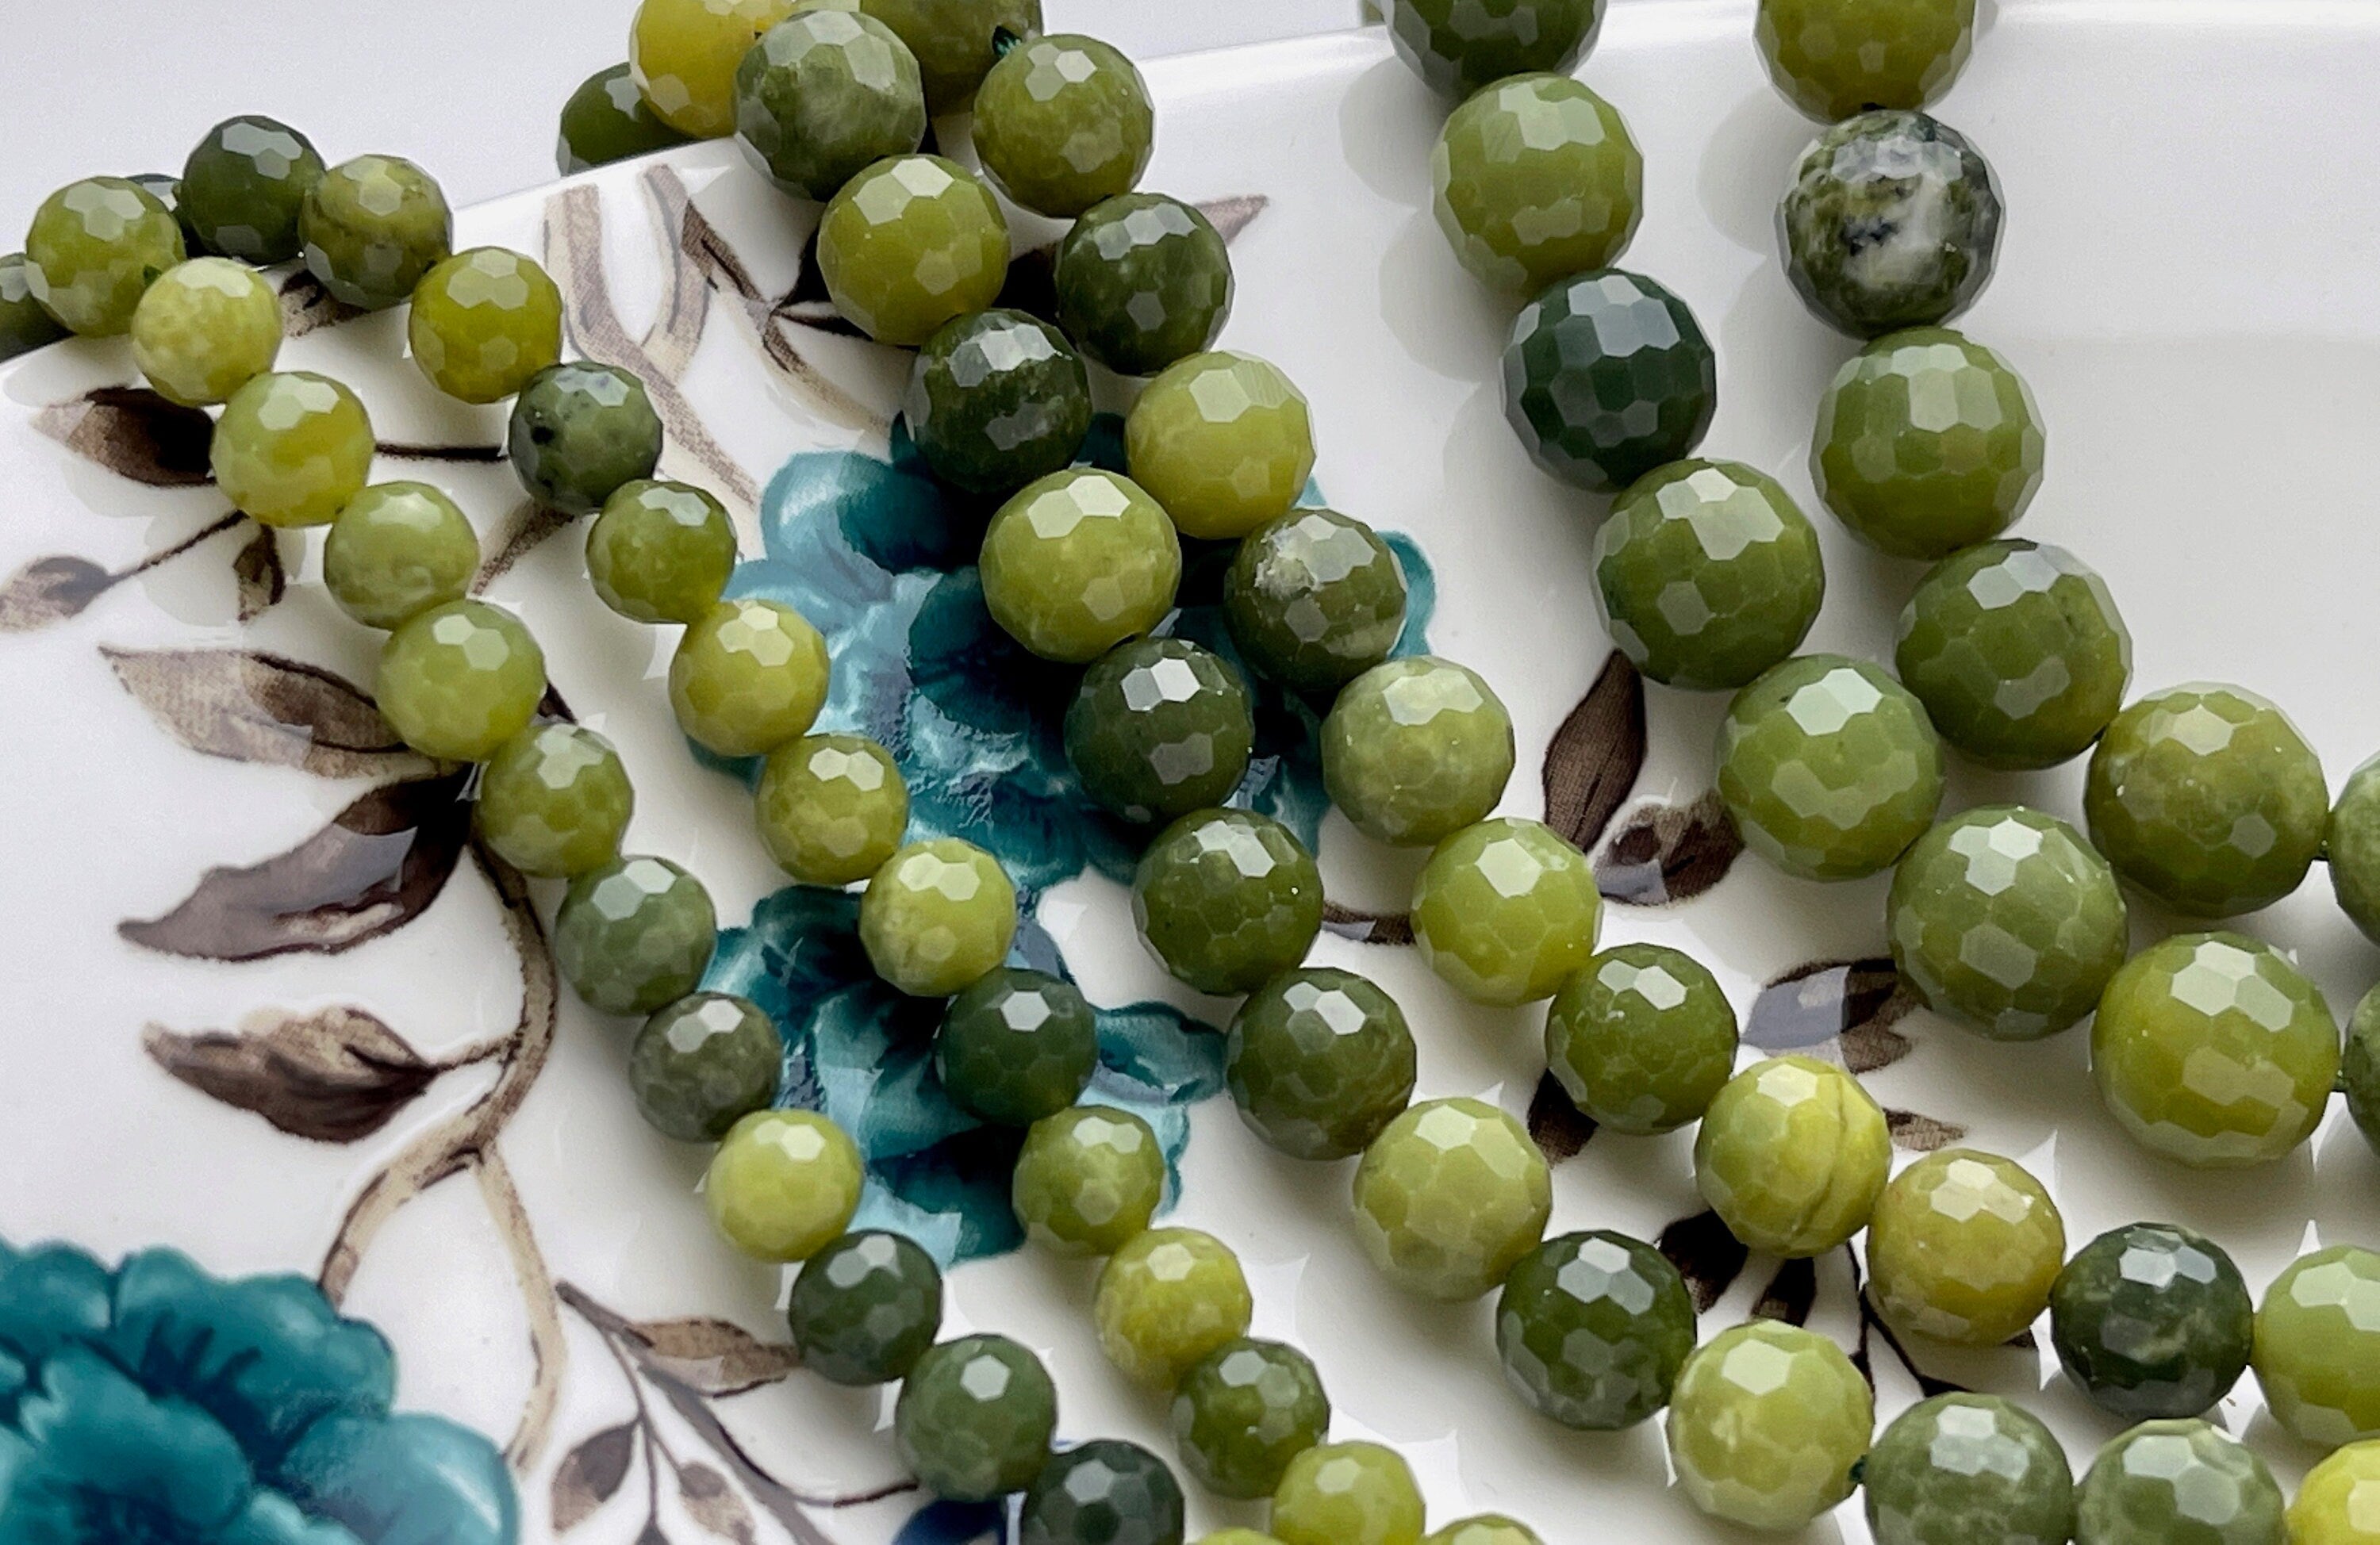 Nephrite Jade Round Beads